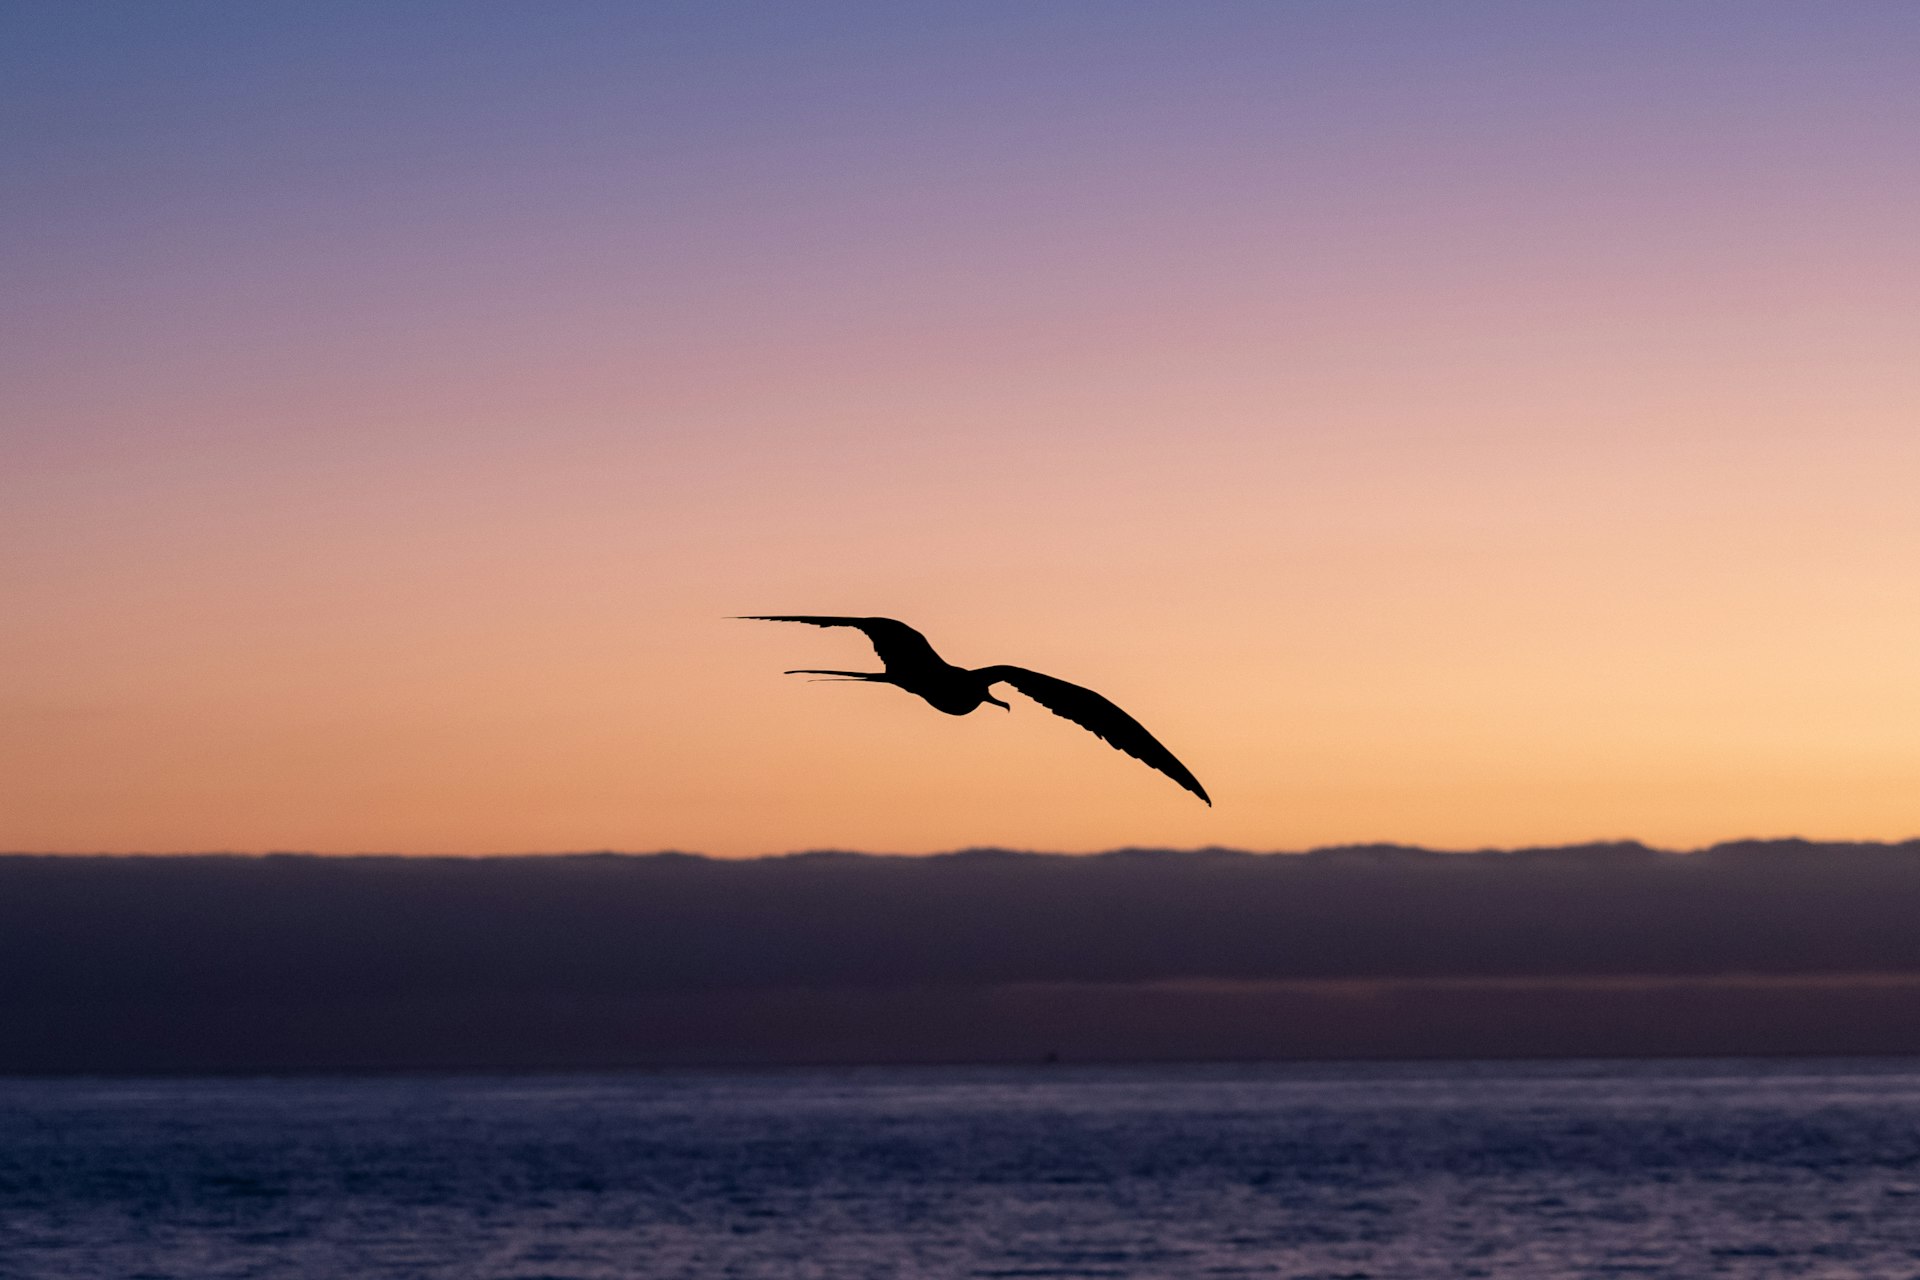 Bird silhouette in front of ocean sunset